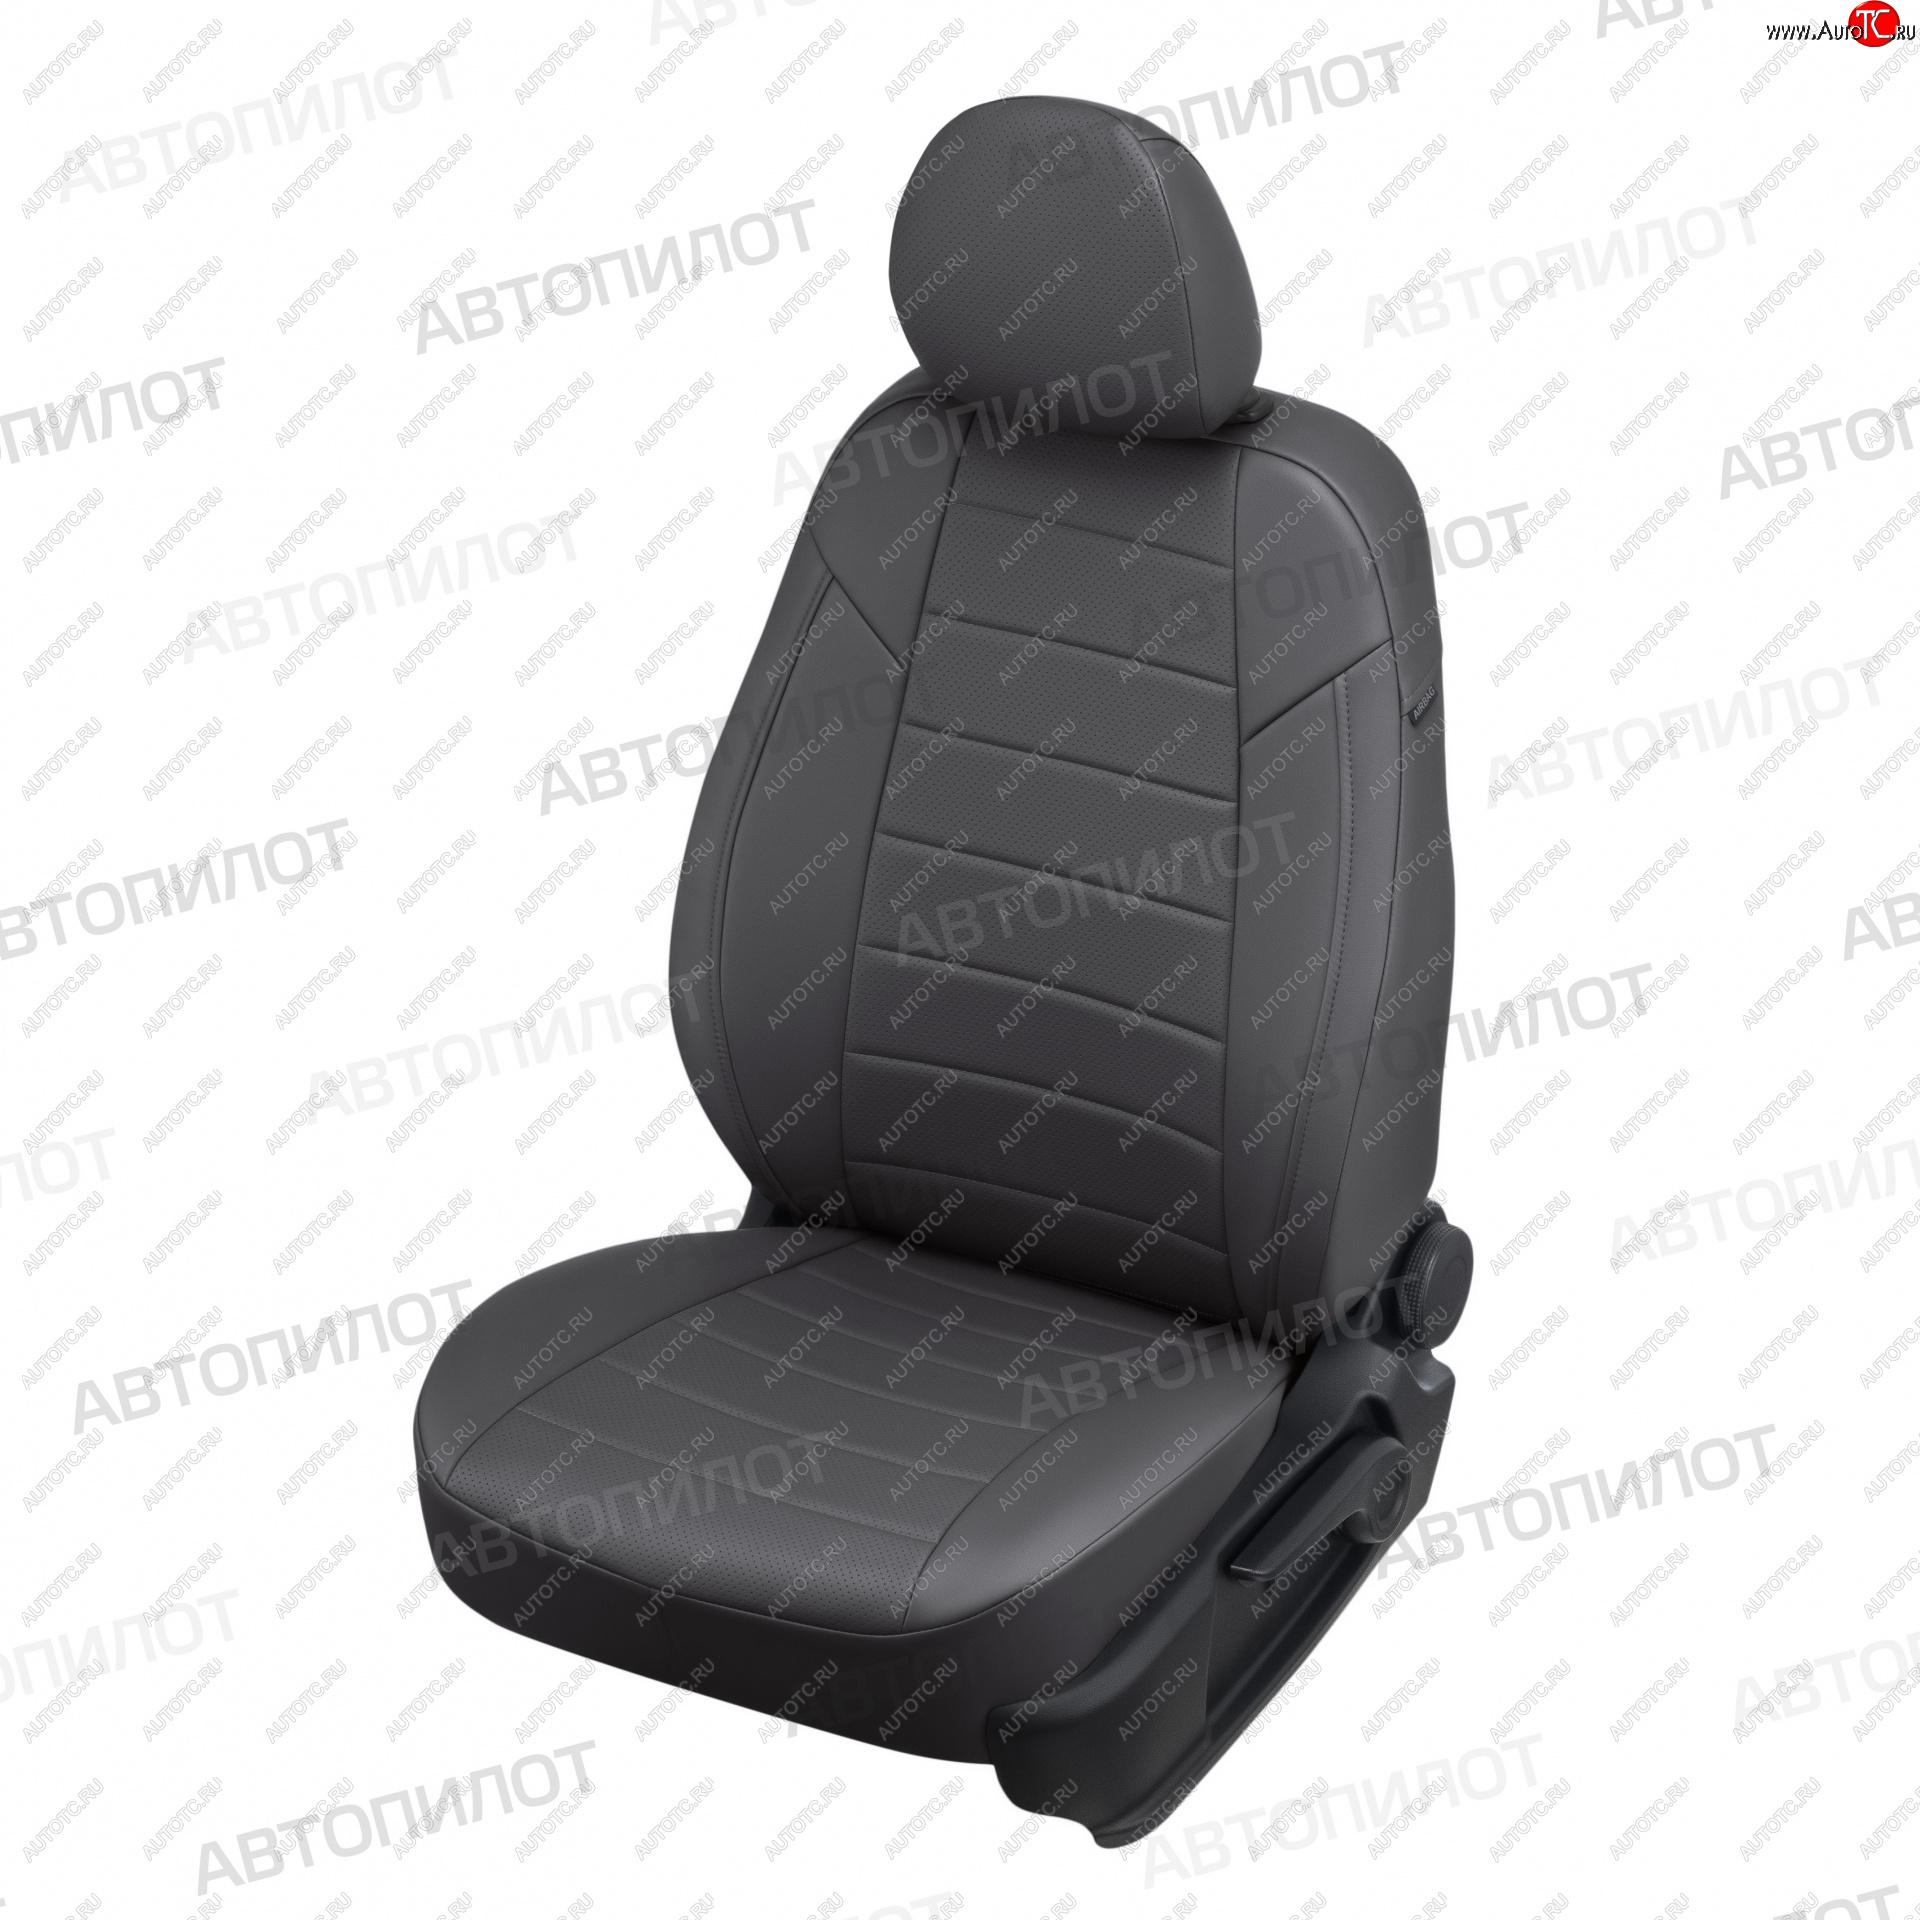 13 849 р. Чехлы сидений (экокожа) Автопилот Chevrolet Lacetti седан (2002-2013) (темно-серый)